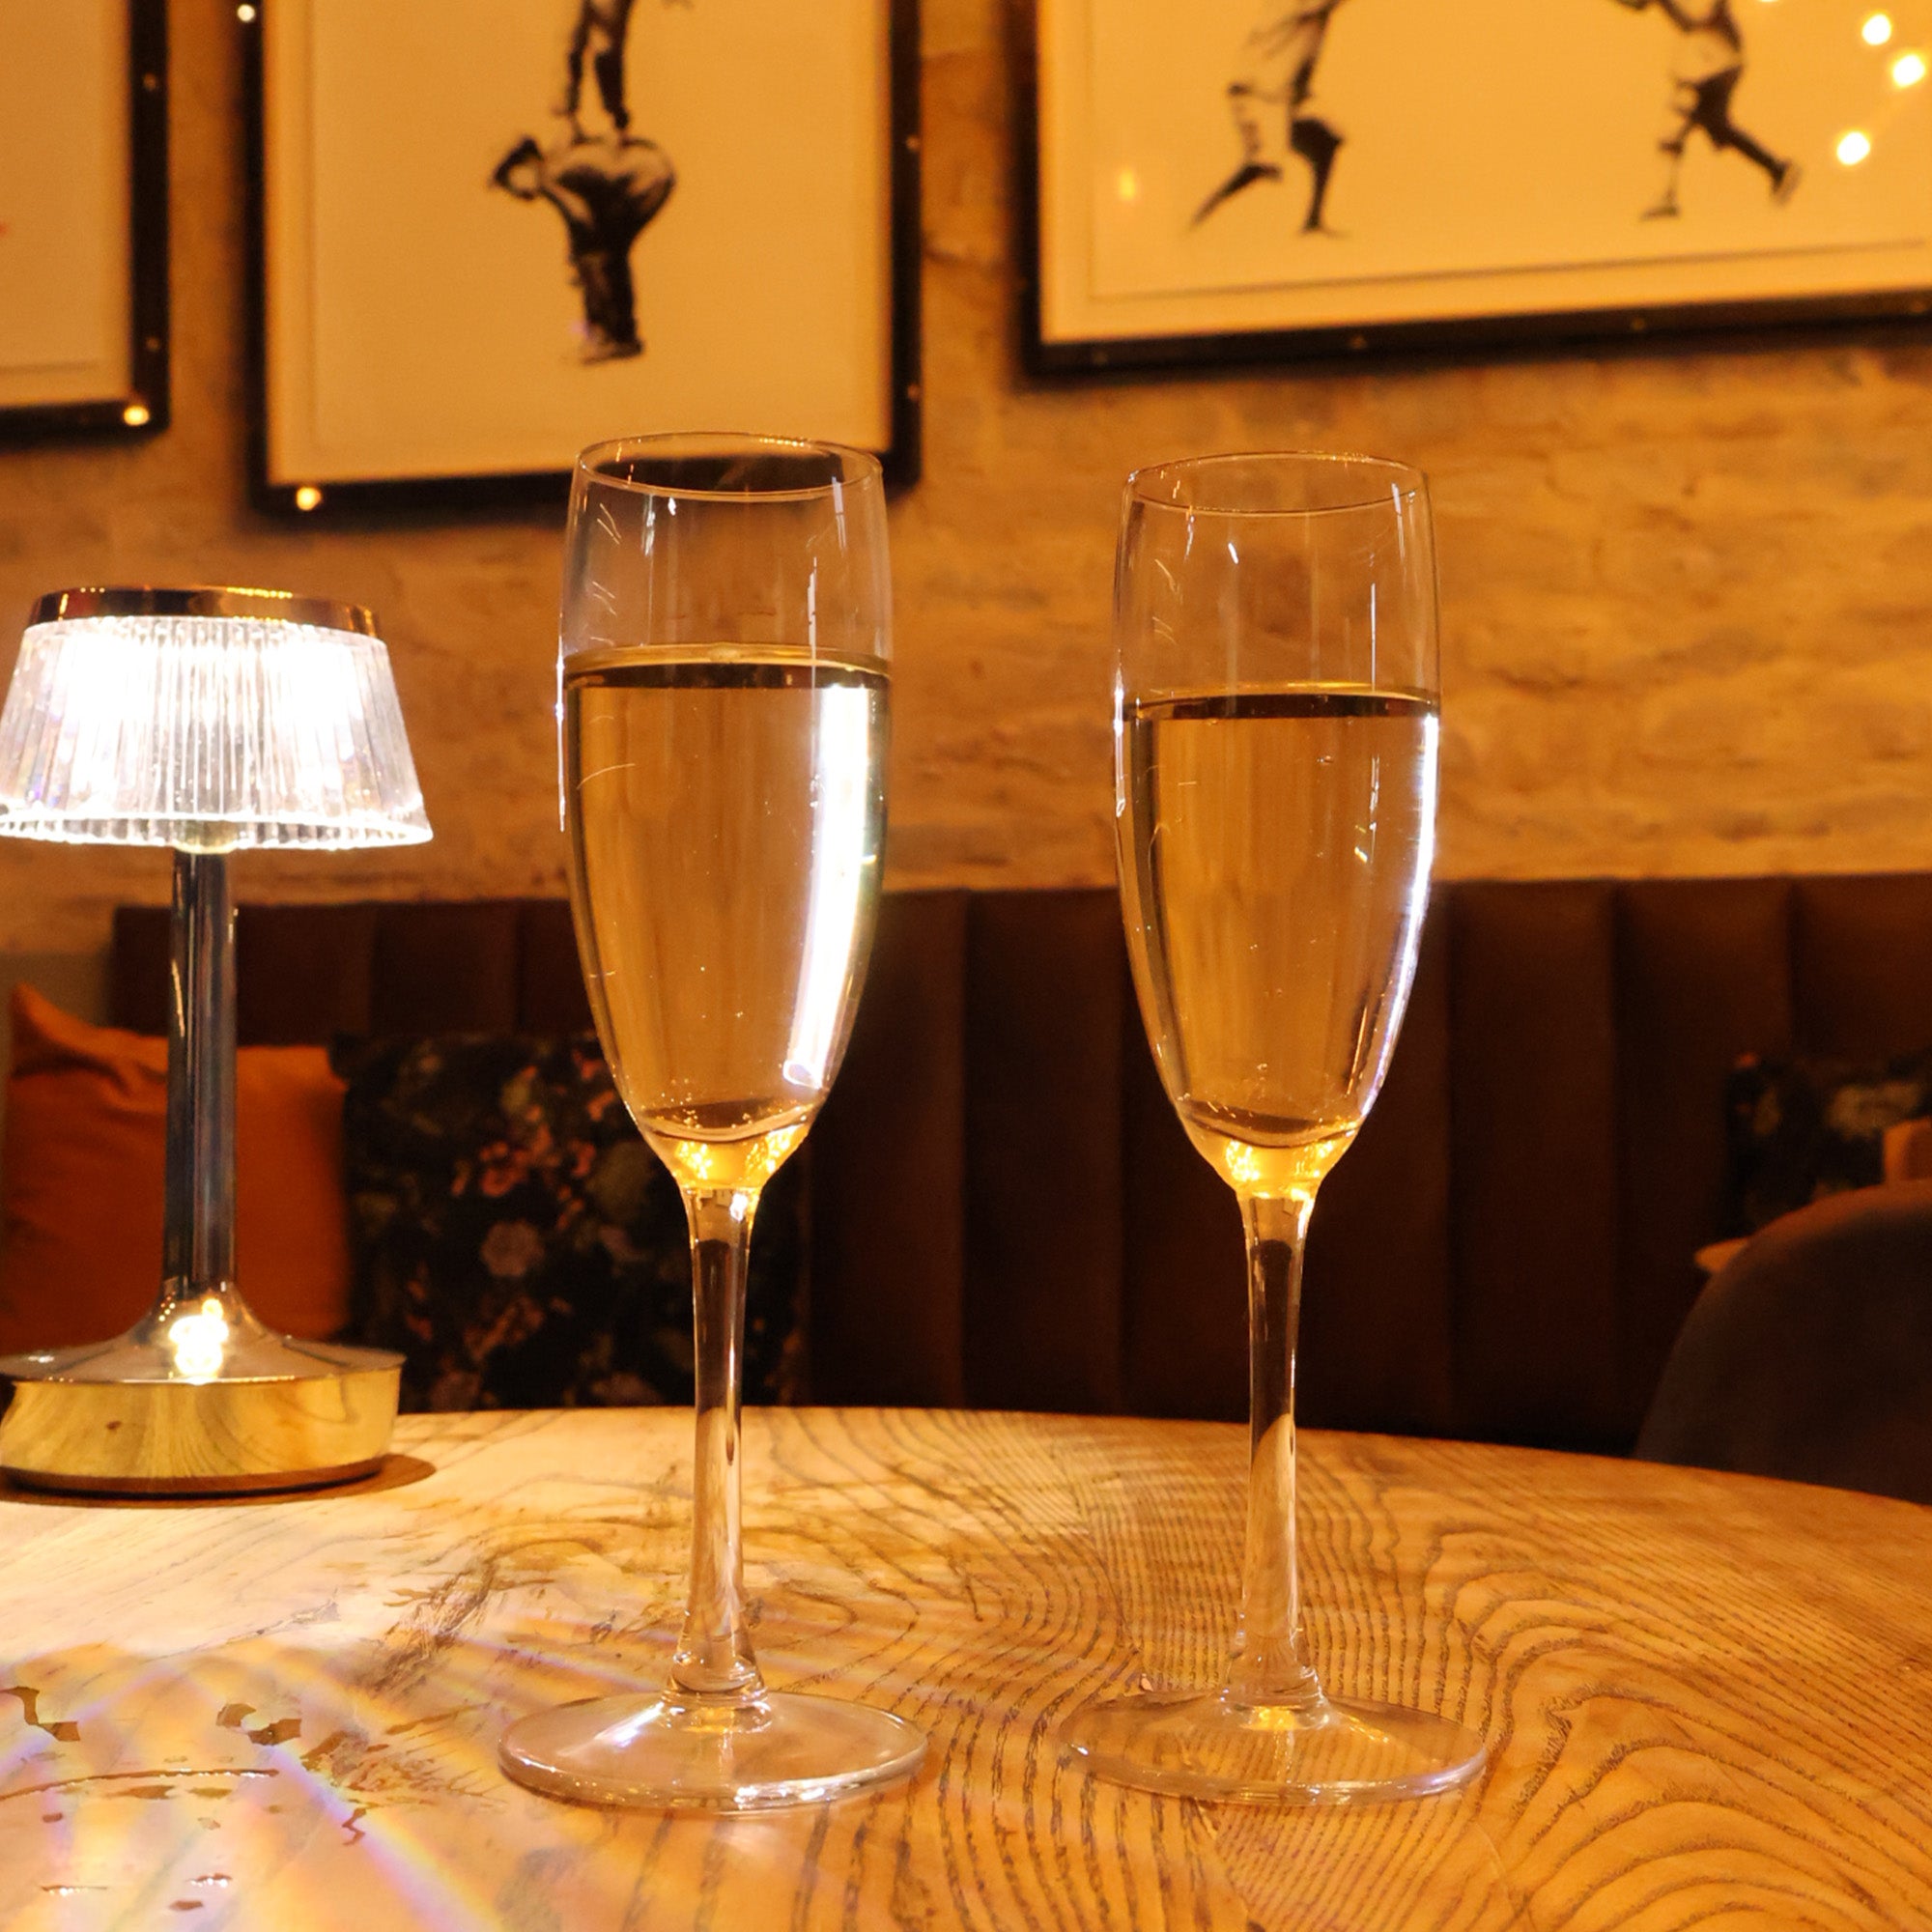 Champagnergläser-Set, 4 Stück, 180 ml, Vinissimo-Design